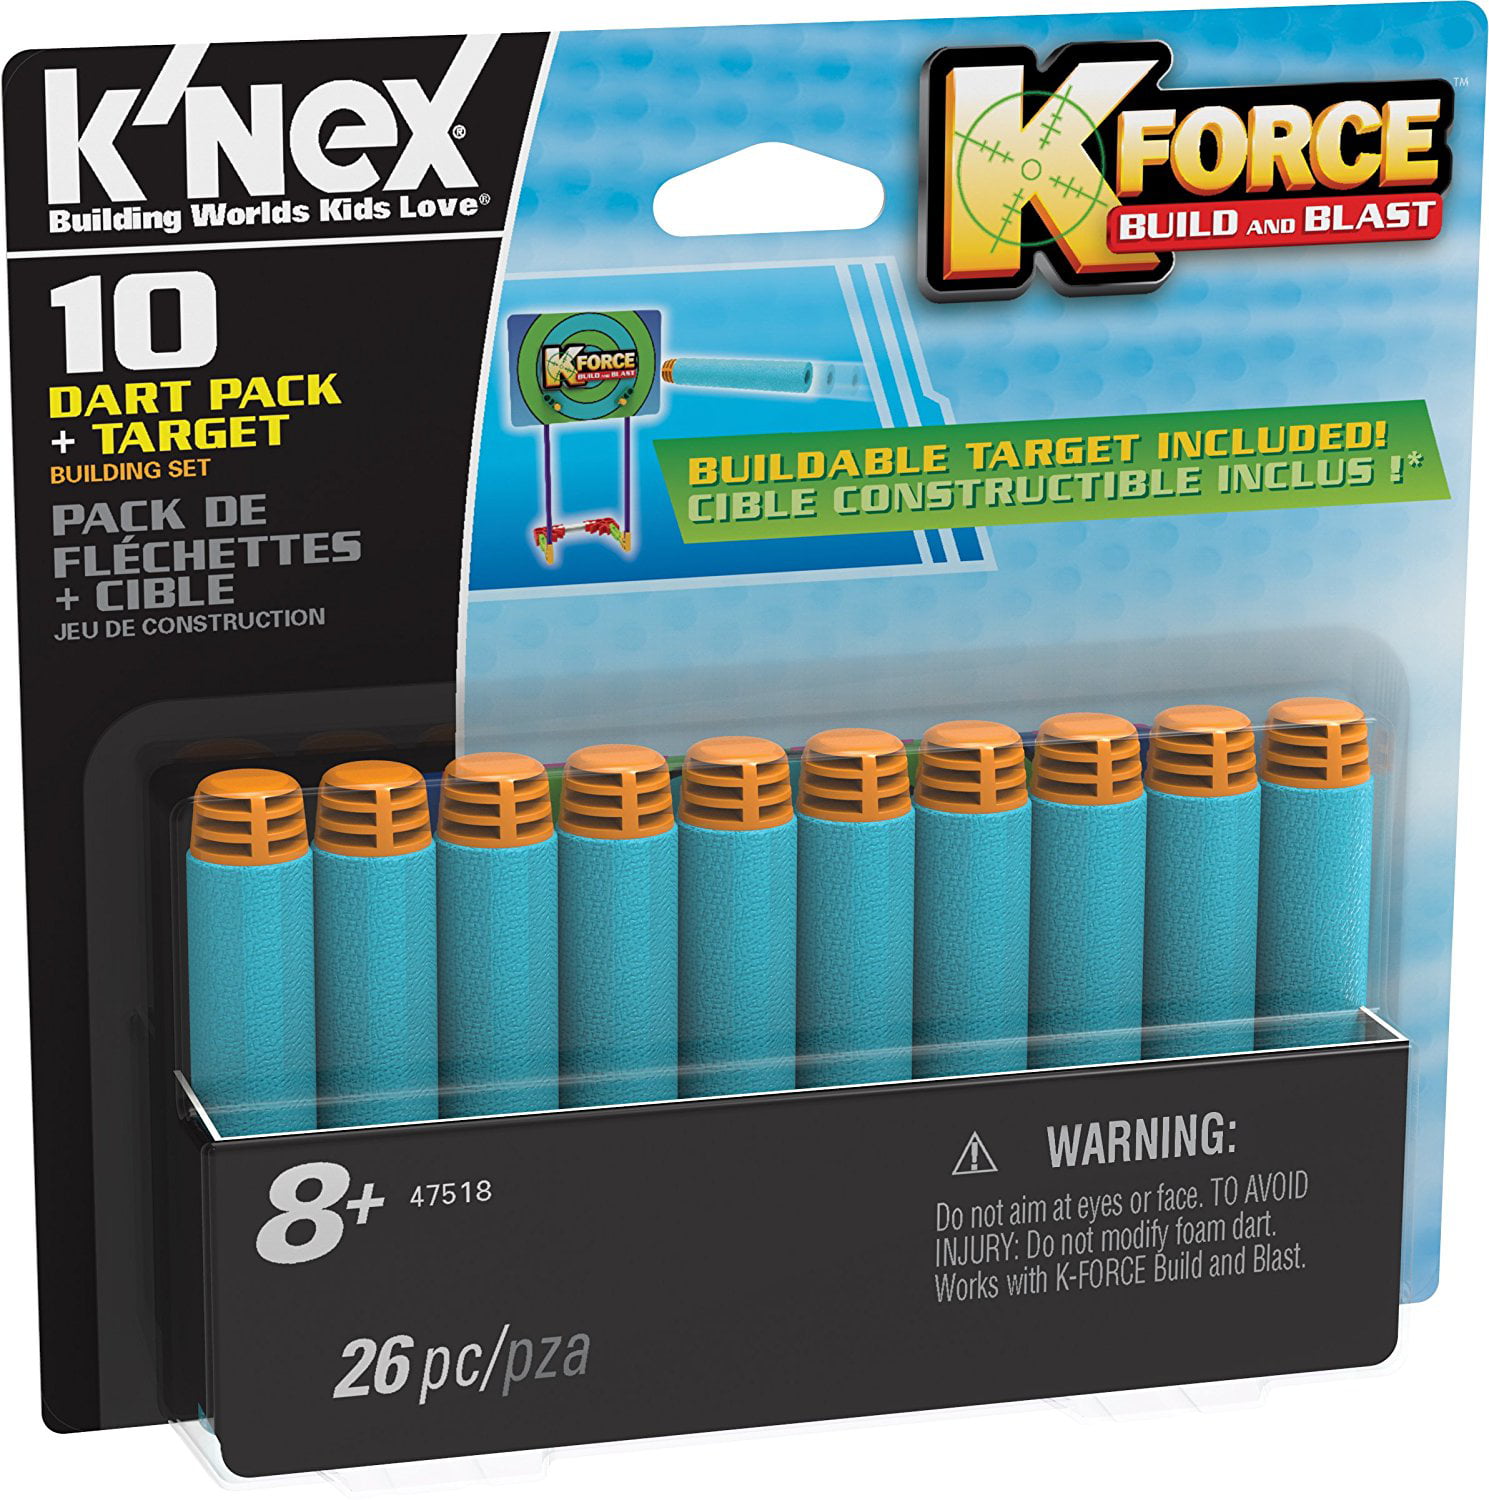 3 PACK 2 10 packs & Free Target K’NEX K-FORCE 10 Dart Pack and Clip 